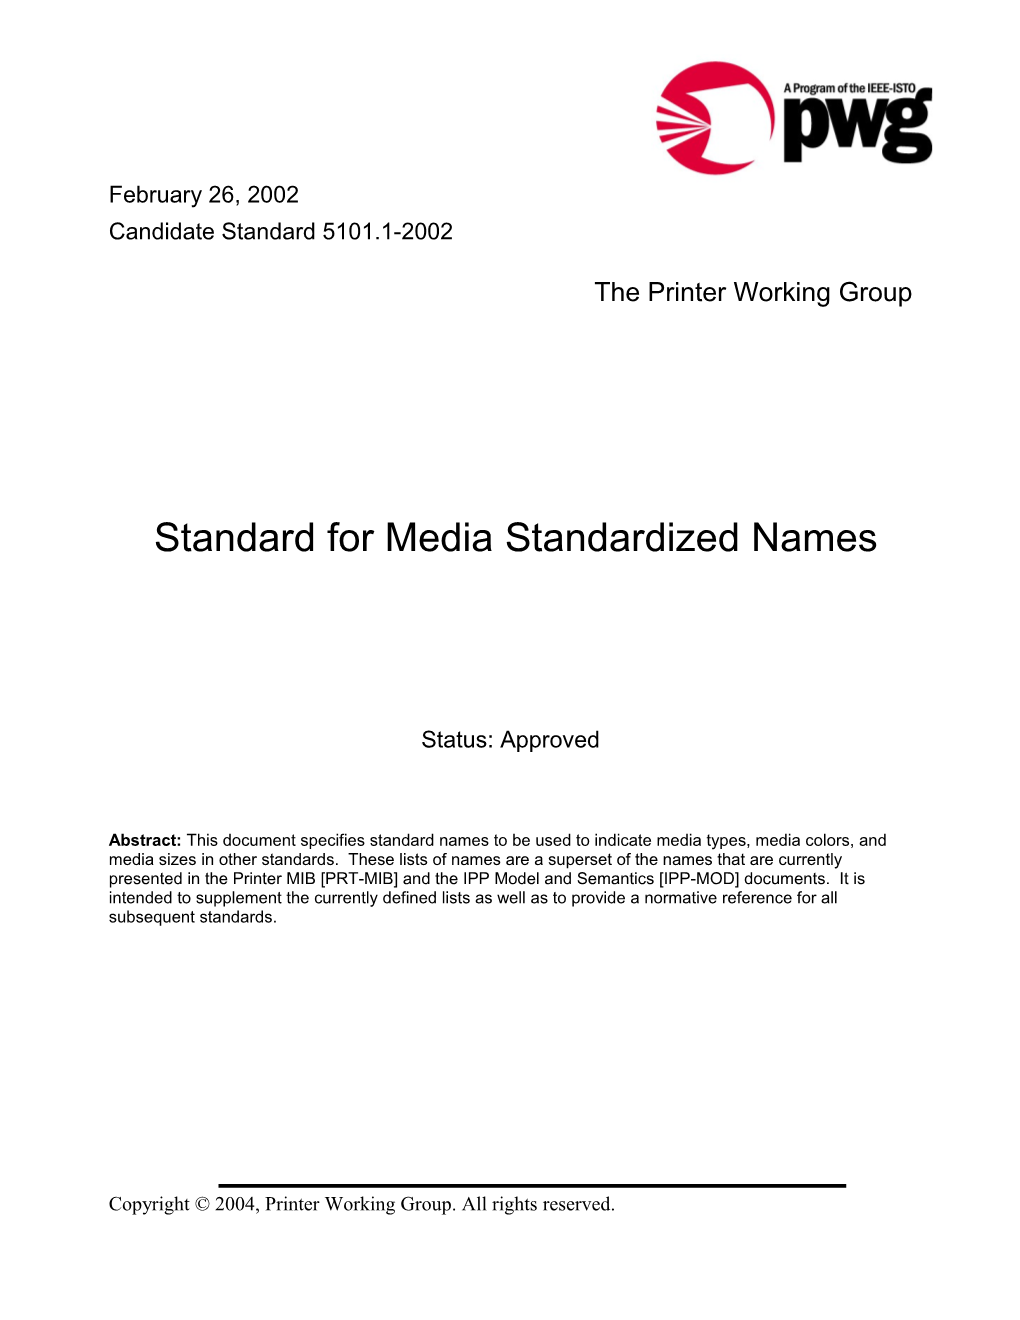 PWG 5101.1-2002 Standard for Media Standardized Names